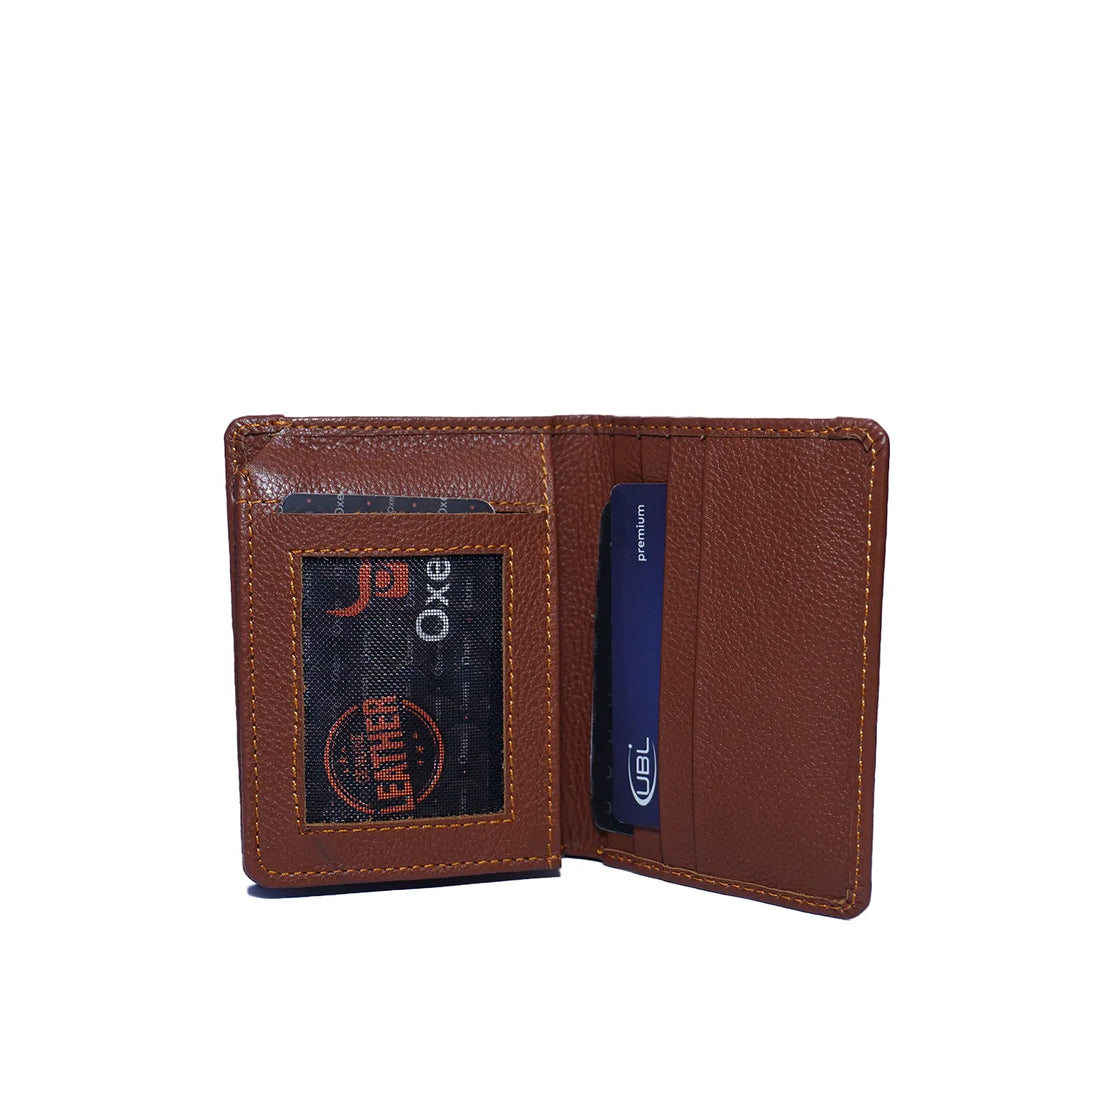 Zephyr Brown Leather Wallet